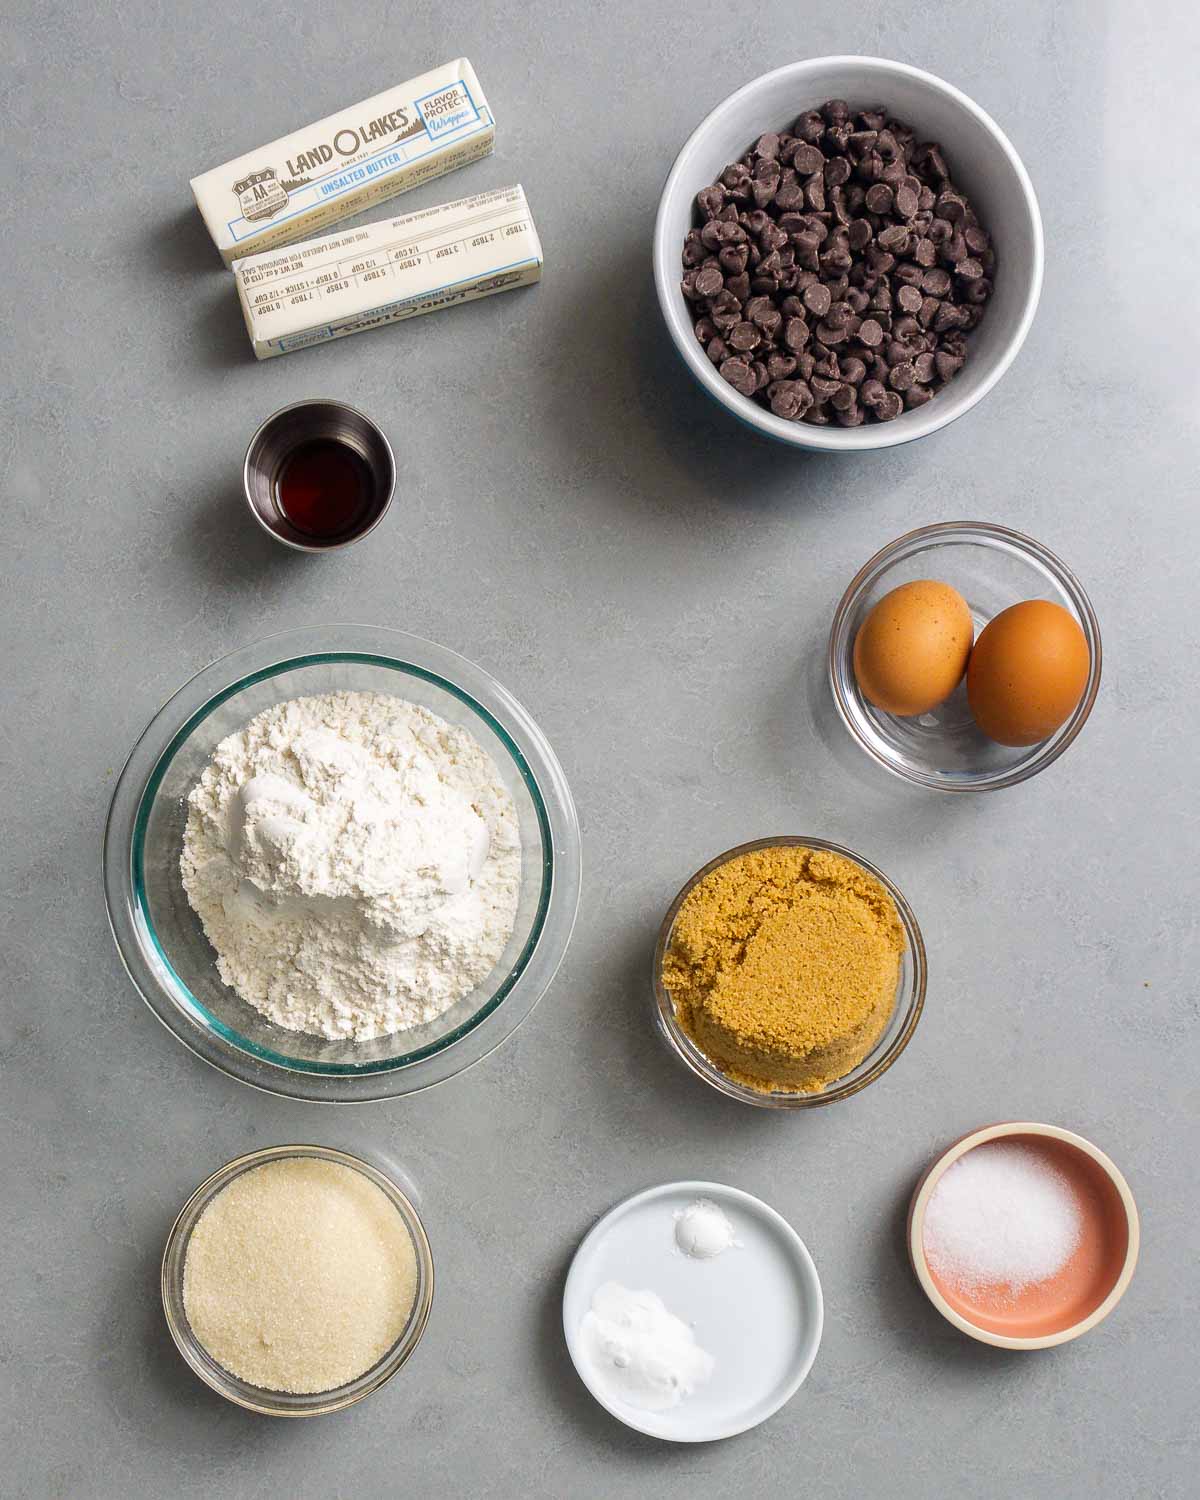 Ingredients shown: butter, chocolate chips, vanilla, eggs, flour, brown sugar, sugar, baking soda and powder, and salt.